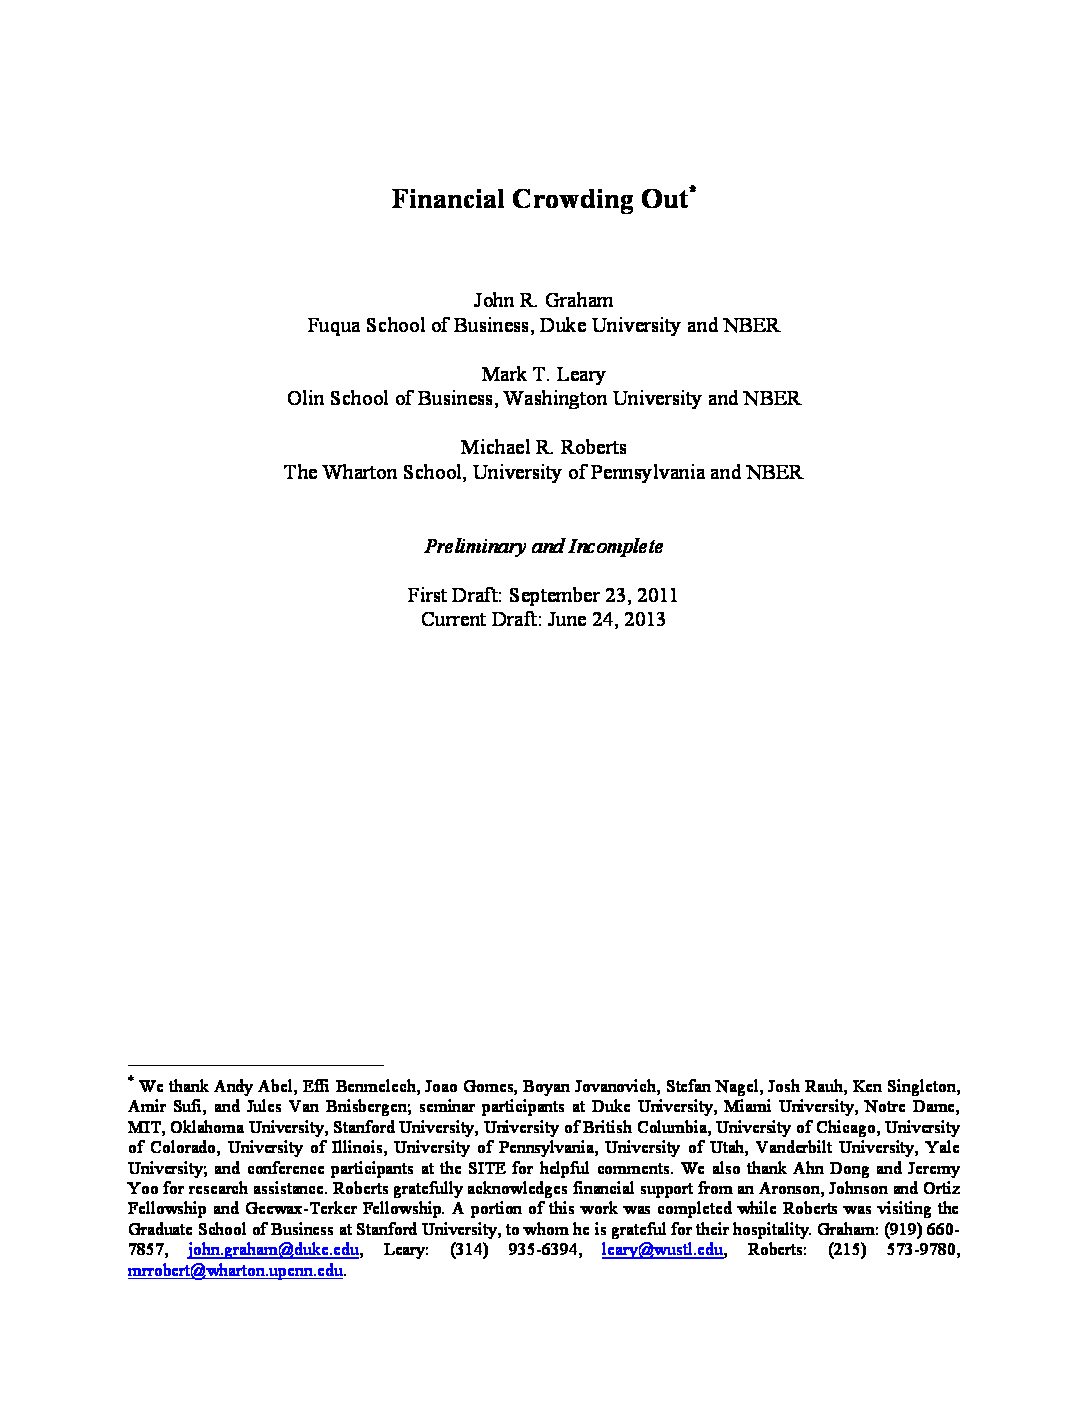 Finance Seminars and Conferences at UVA